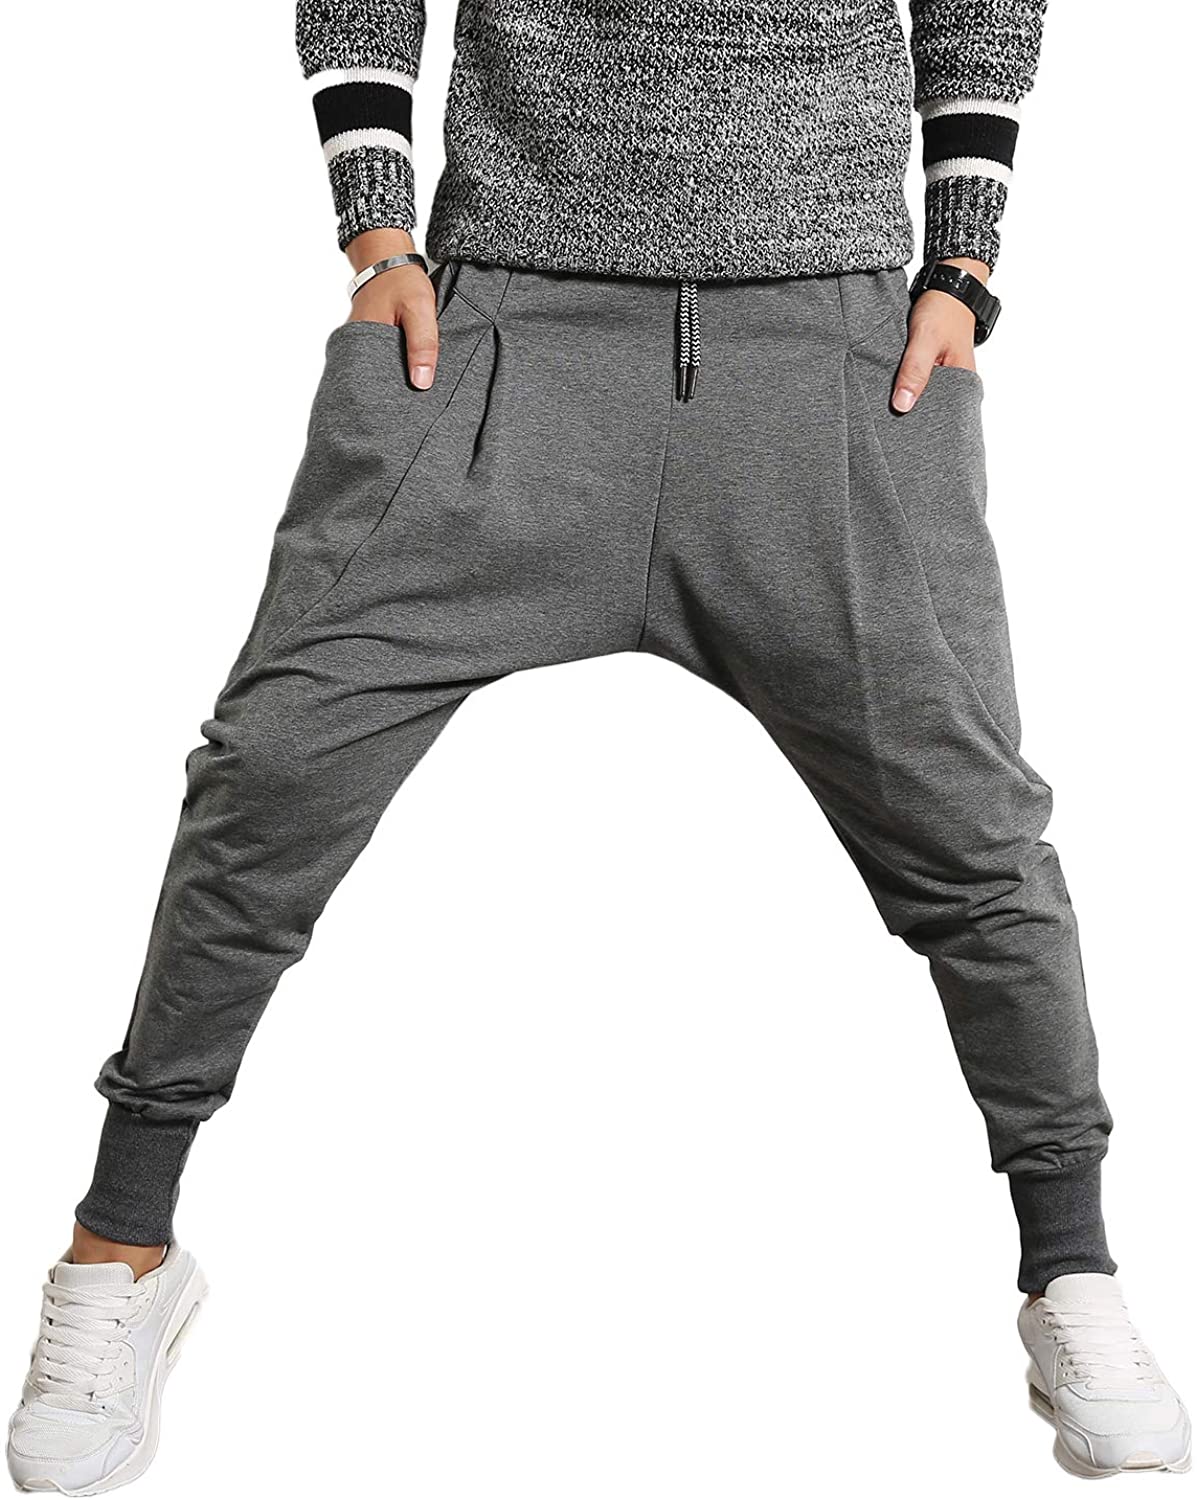 Clearance RYRJJ Men's Jogger Sweatpant with Pockets Fashion Drawstring  Hip-Hop Harem Pants Streetwear Casual Slim Fit Athletic Tapered Pants(Dark